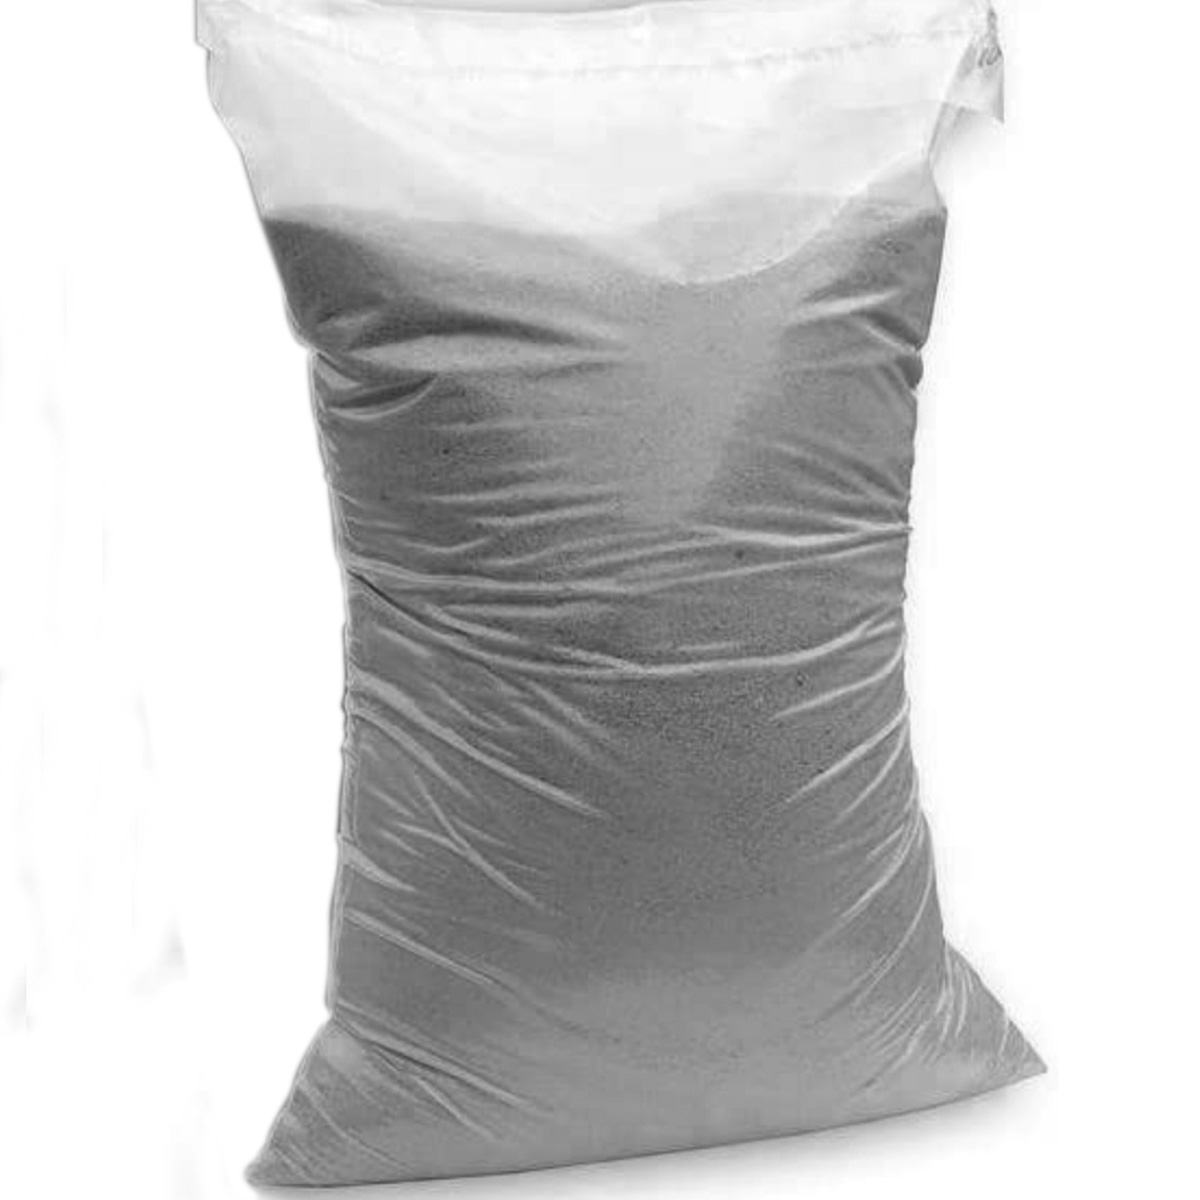 20kg agg dust clear plastic sandbags